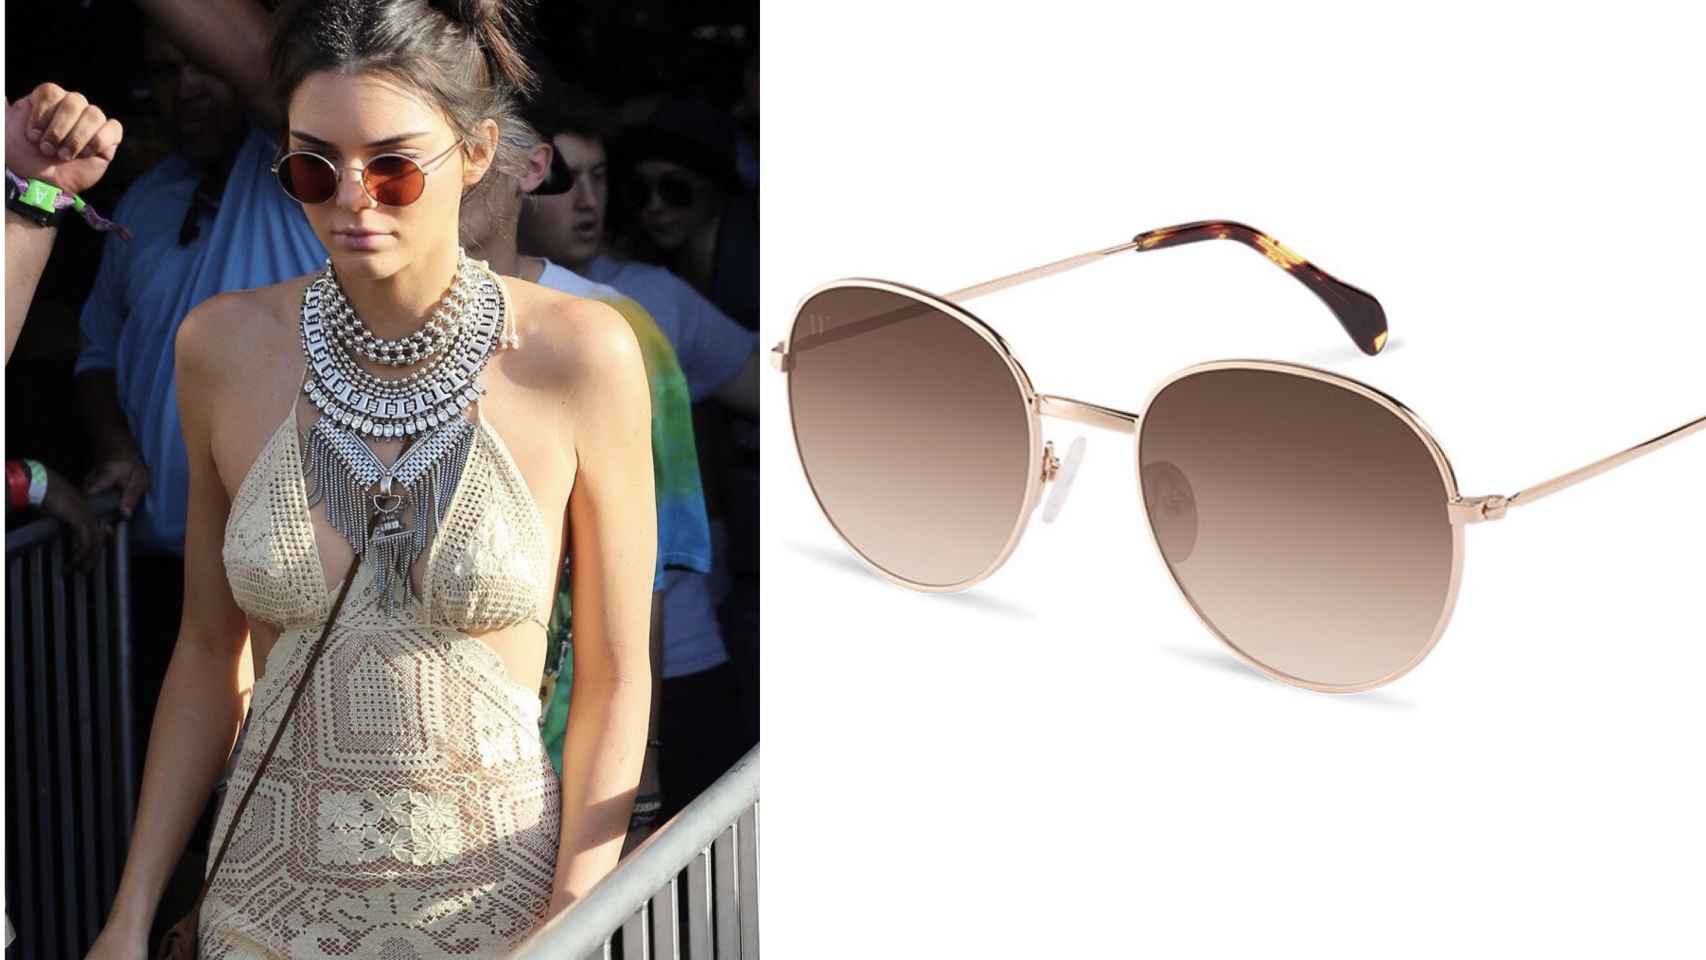 El modelo 'Akela Gold Flamingo' de 'Wolfnoir', muy similar a las gafas de Kendall Jenner.